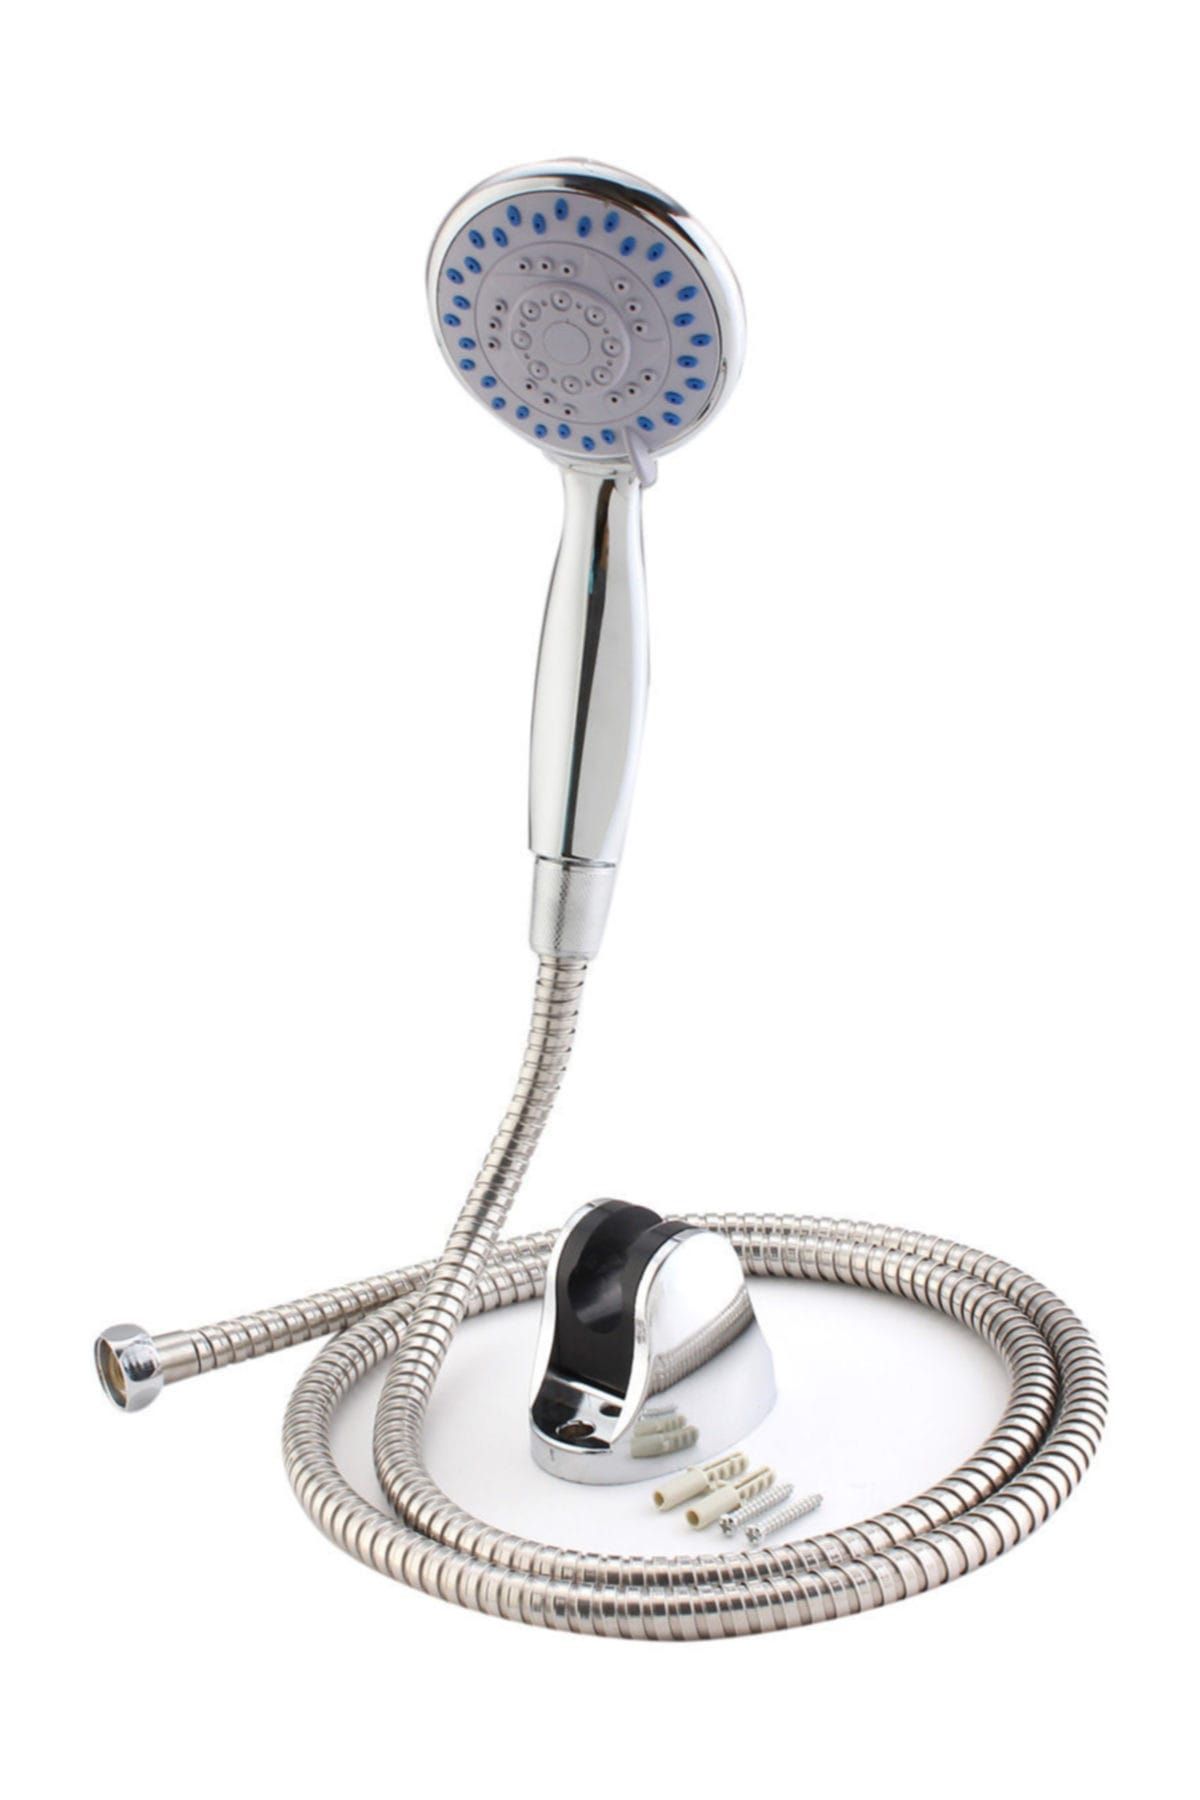 Xolo Onyon Hortumlu Duş Başlığı Mafsallı Duş Seti 3 Fonksiyonlu Duş Başlığı Duş Banyo Duşakabin